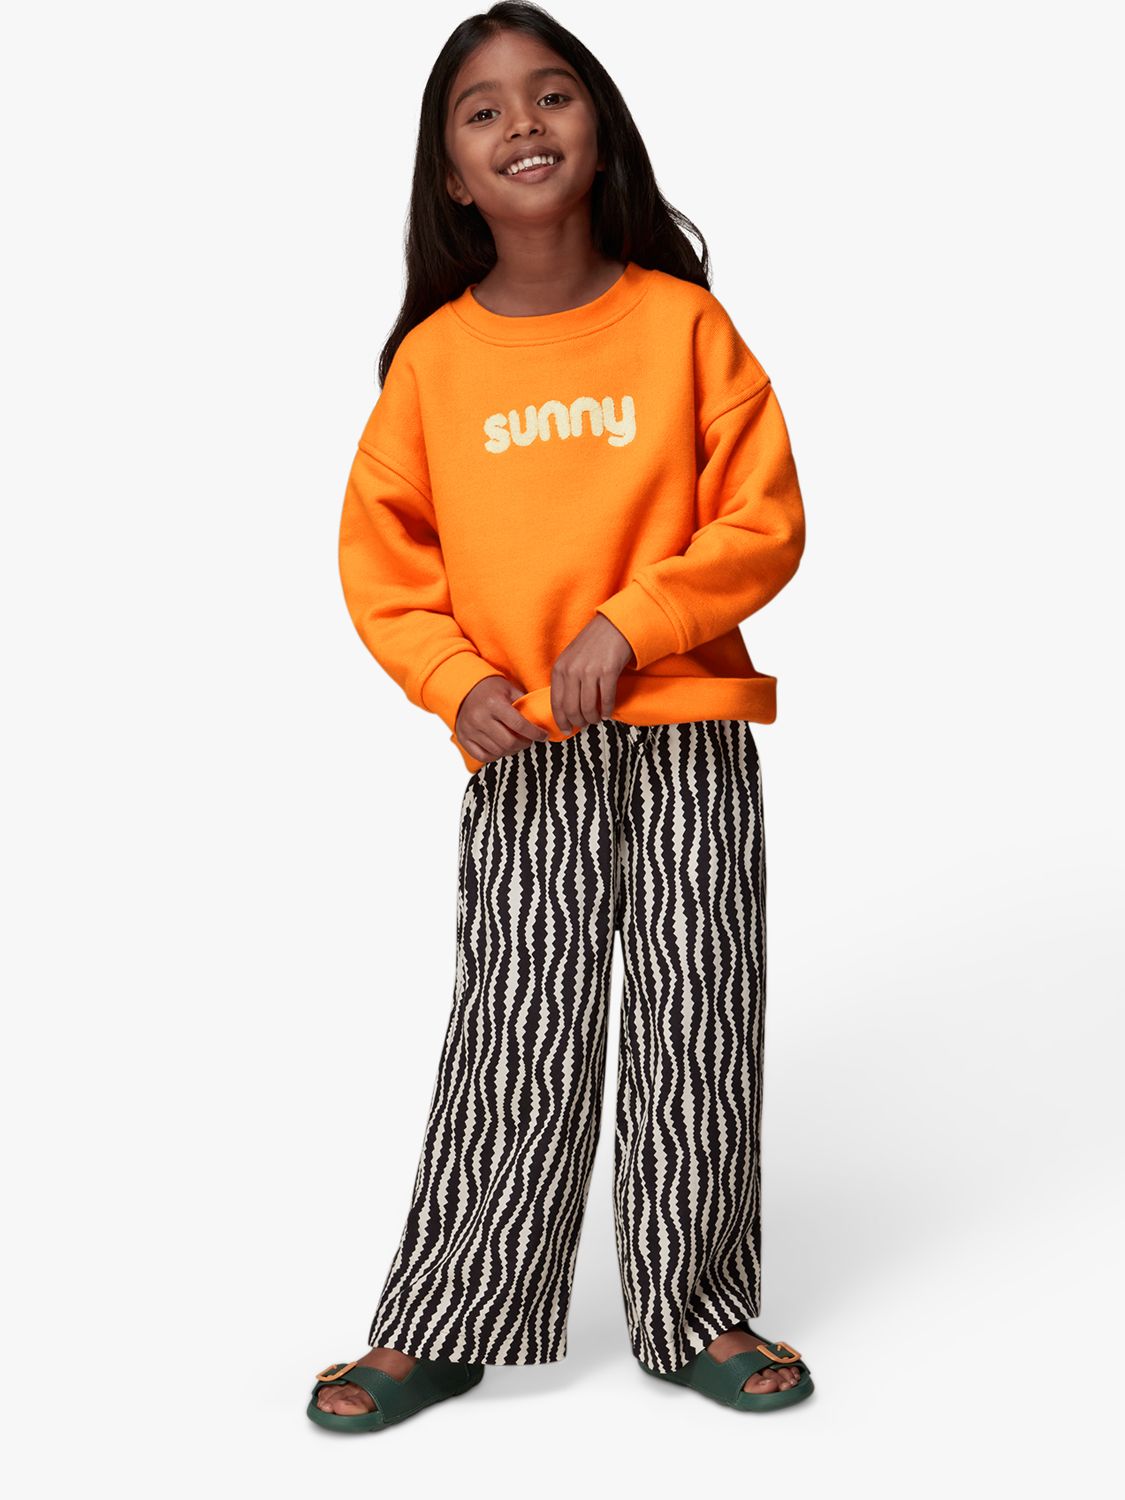 Whistles Kids' Sunny Sweatshirt, Orange, 8-9 years